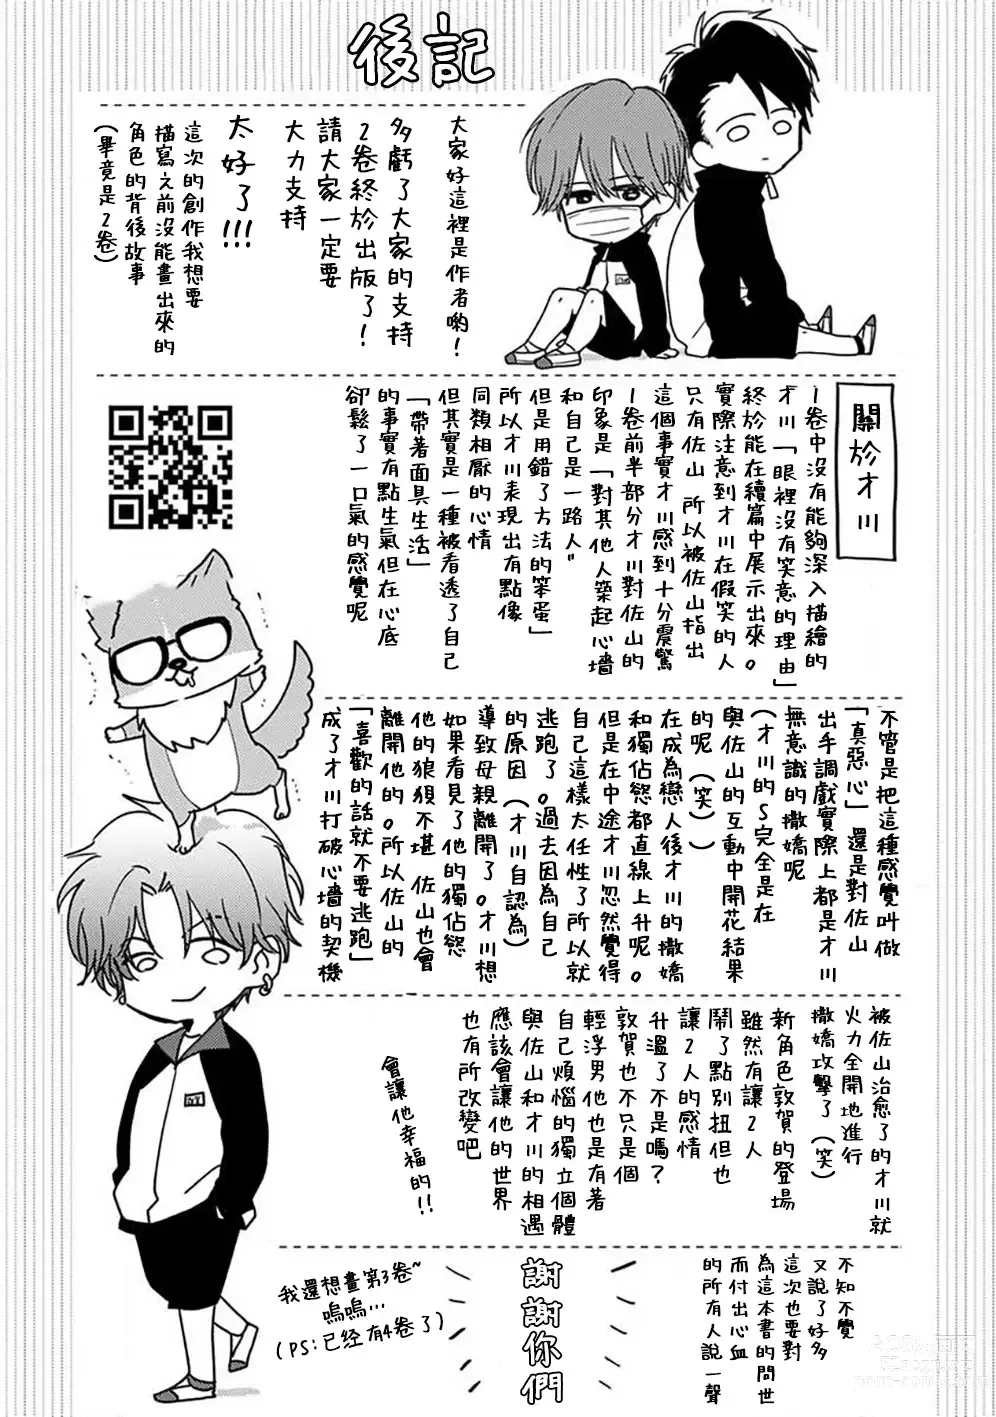 Page 219 of manga 口罩男子明明不想恋爱2 Ch. 11-19 番外“文化祭之夜” + 其他番外